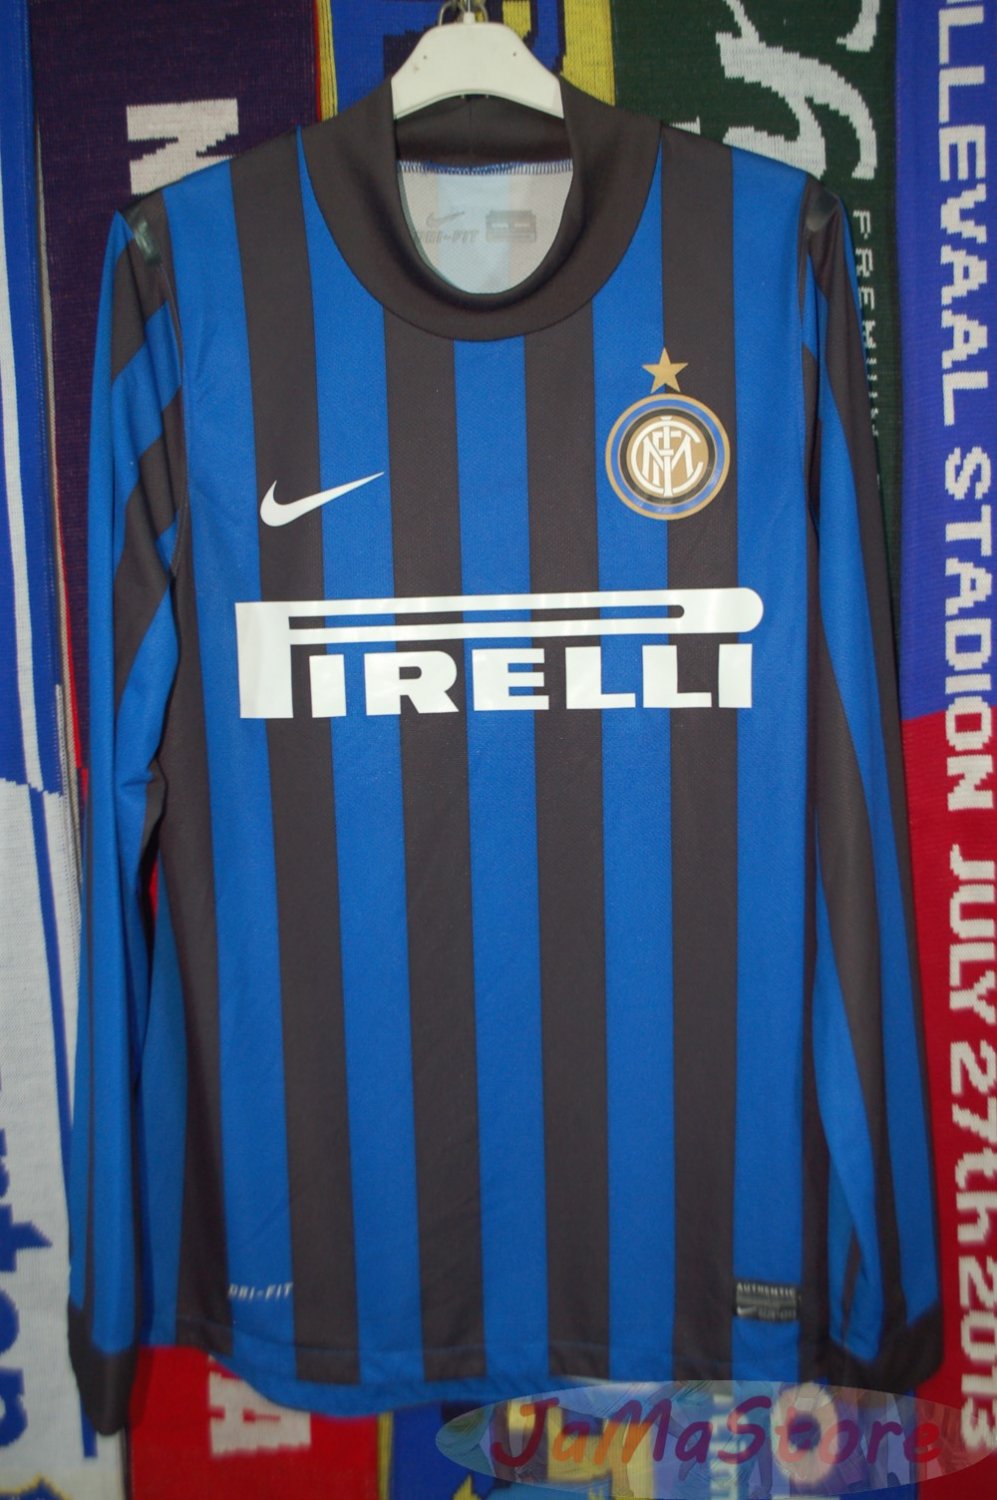 Internazionale Special football shirt 2011 - 2012. Sponsored by Pirelli